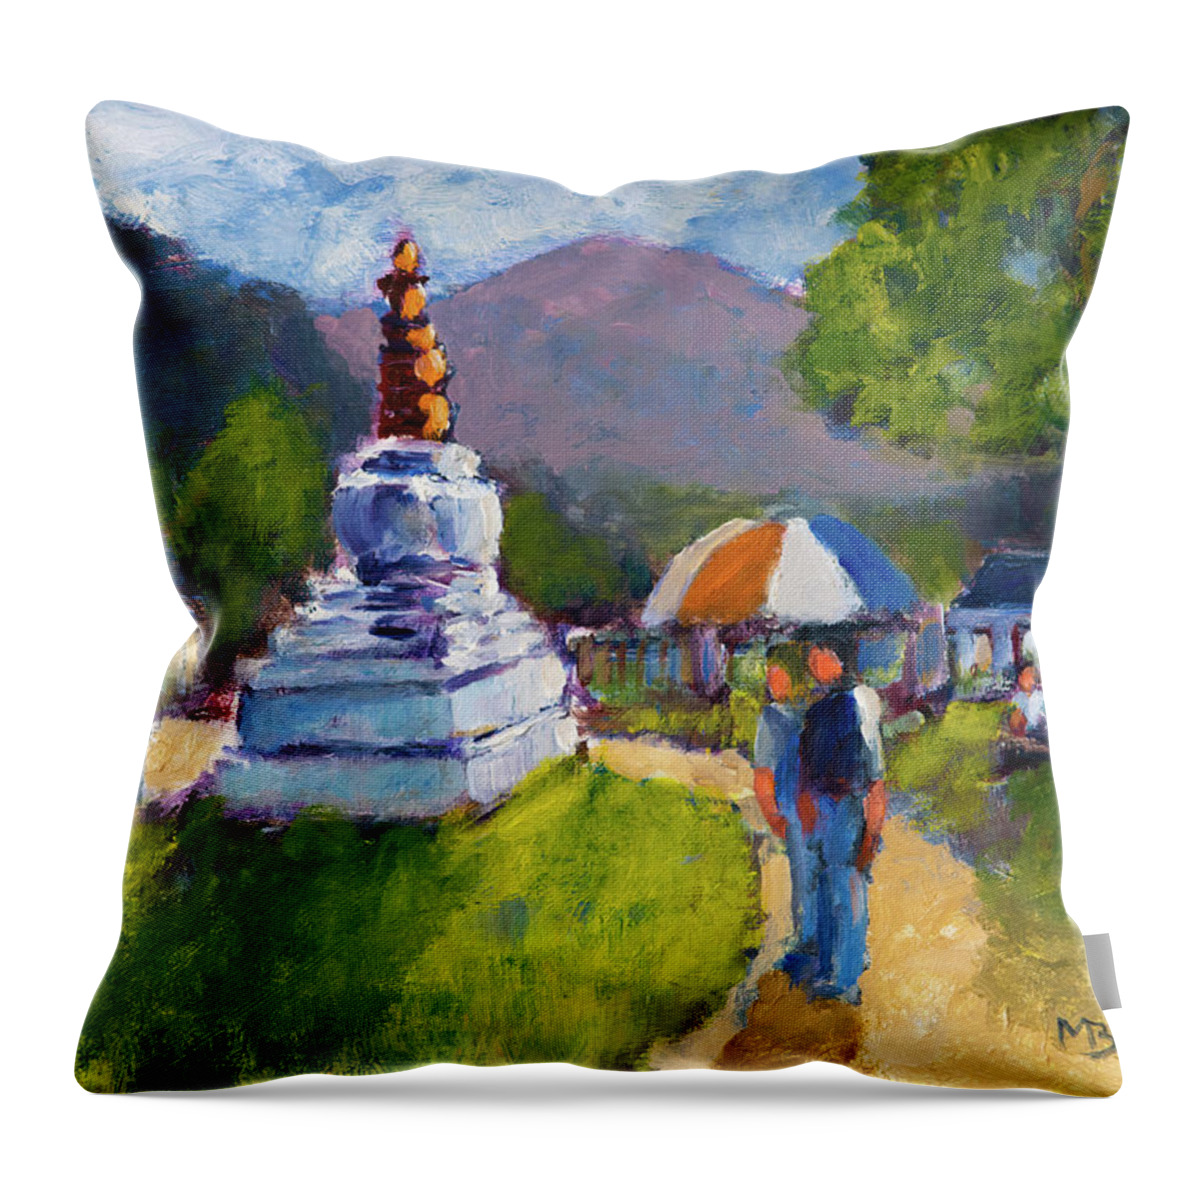 Bhutan Throw Pillow featuring the painting Bhutan by Mike Bergen